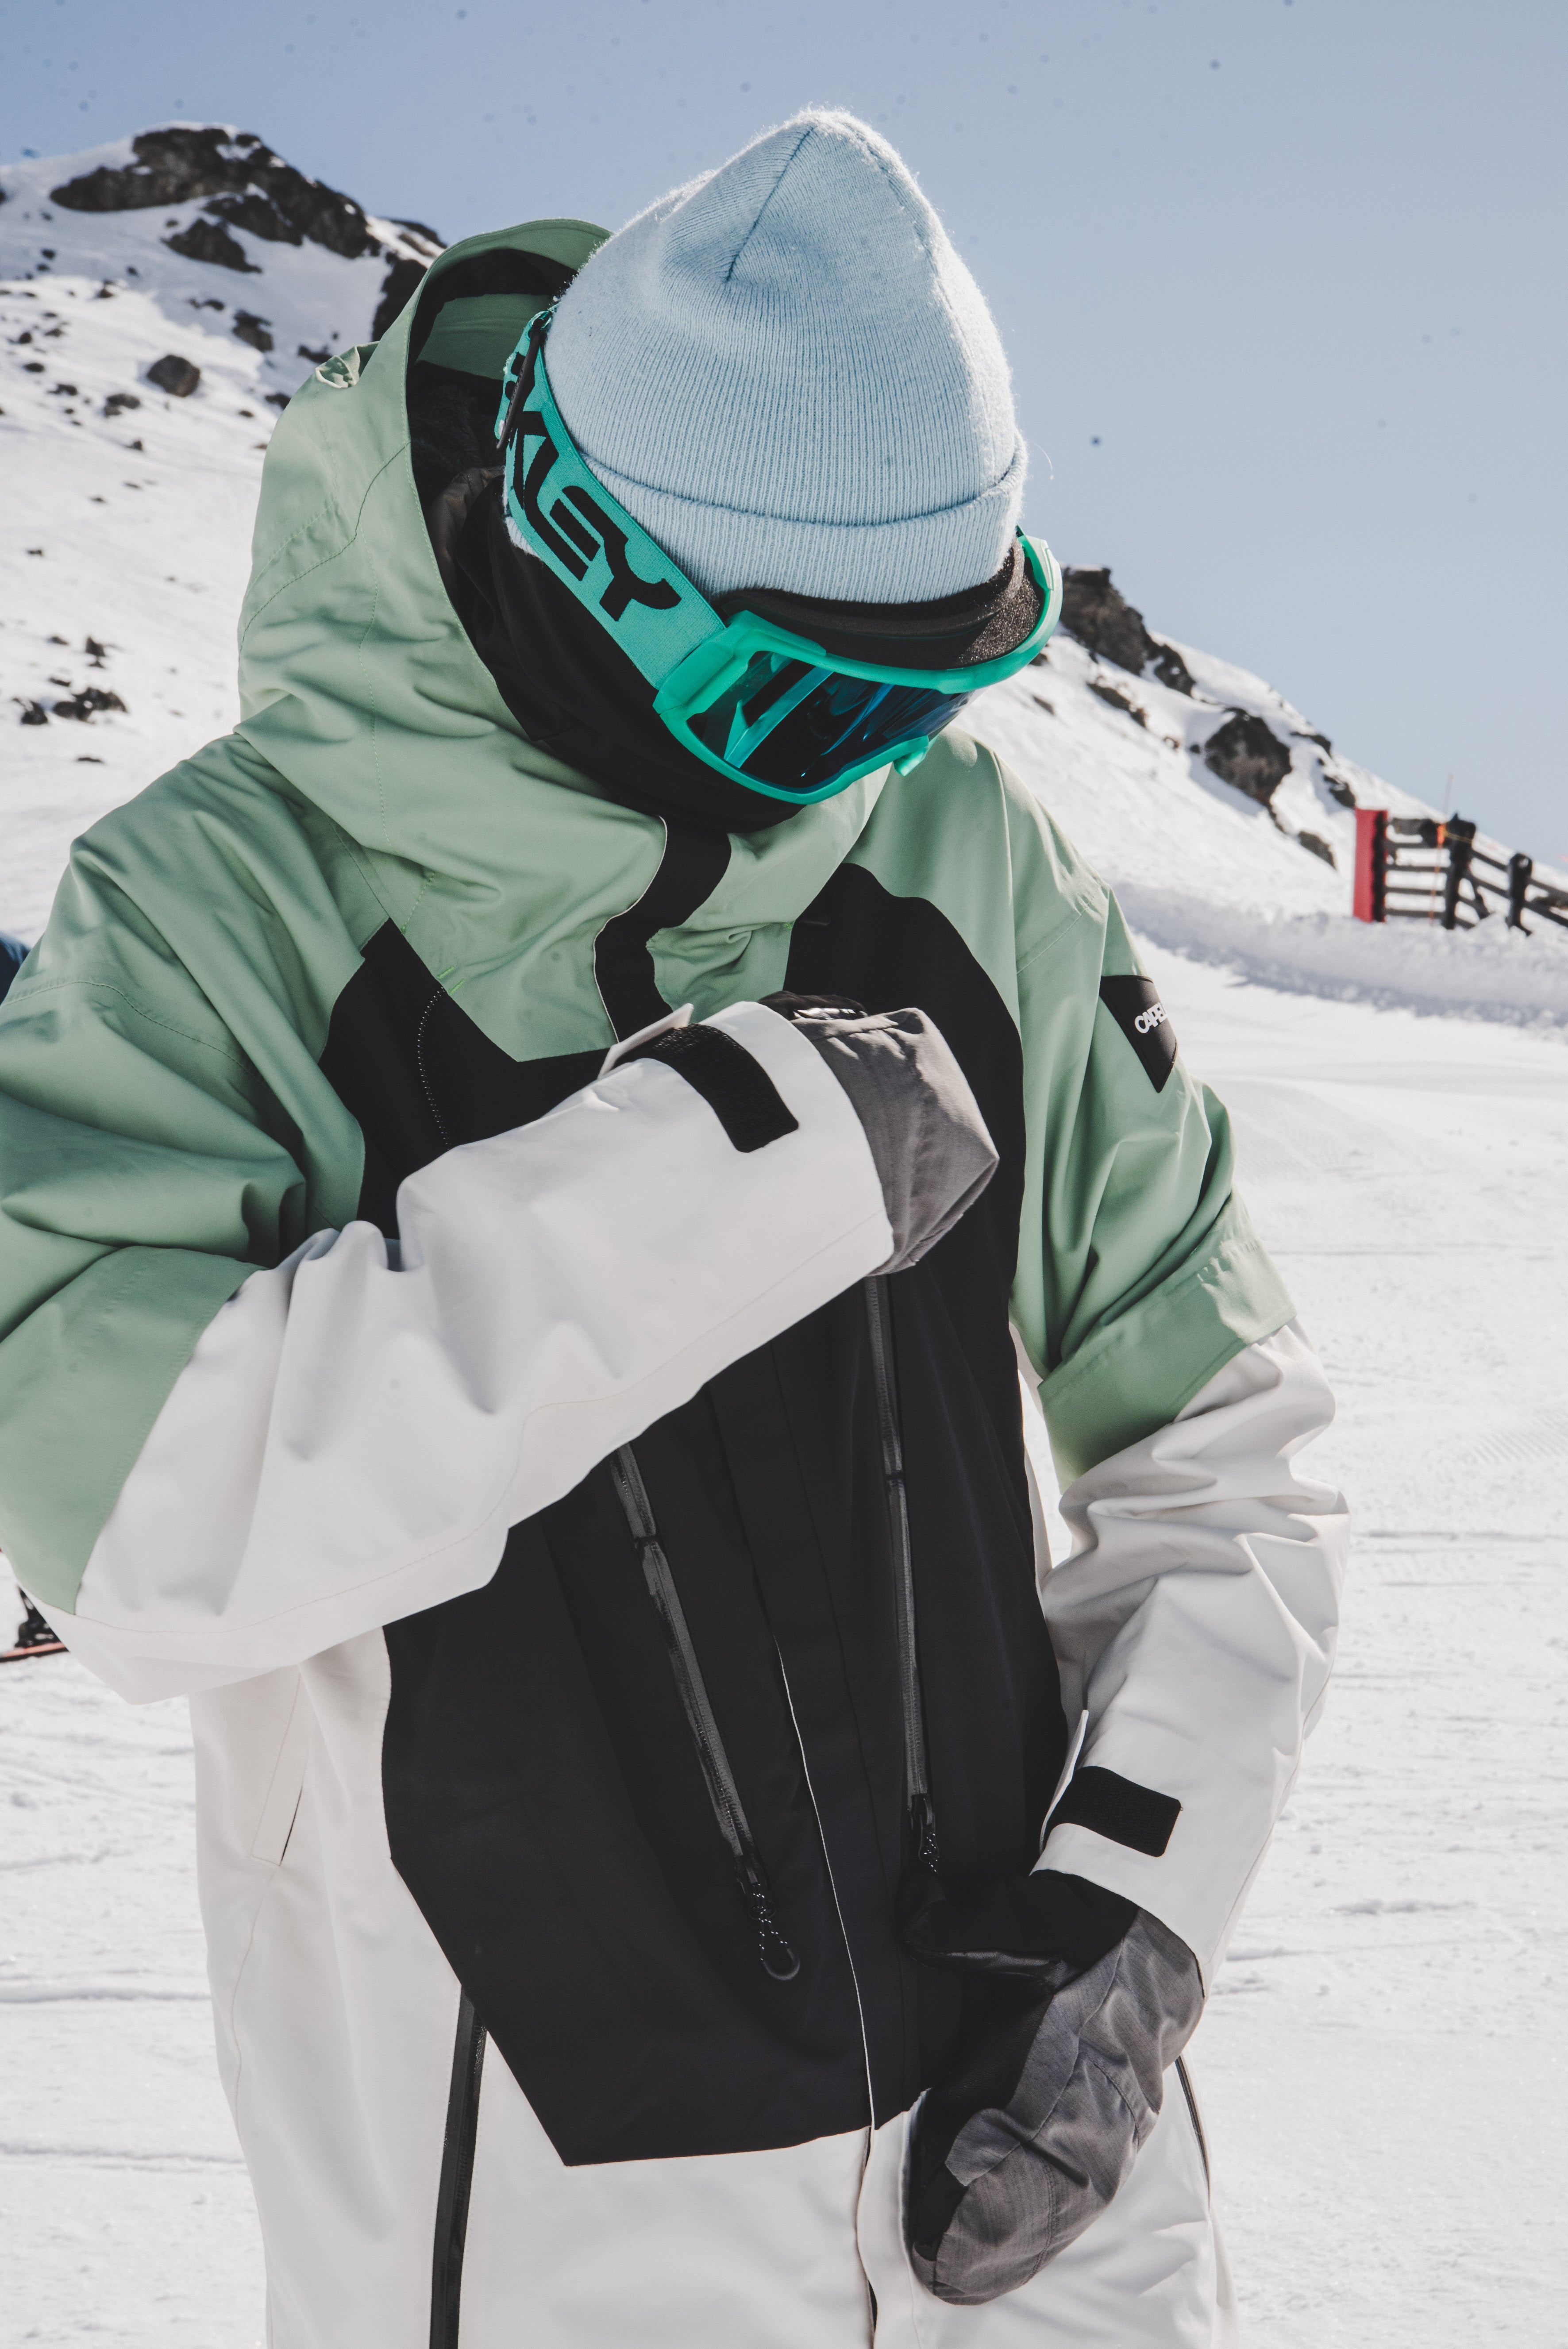 Can Ski Jackets And Snowboard Jackets Keep You Warm?